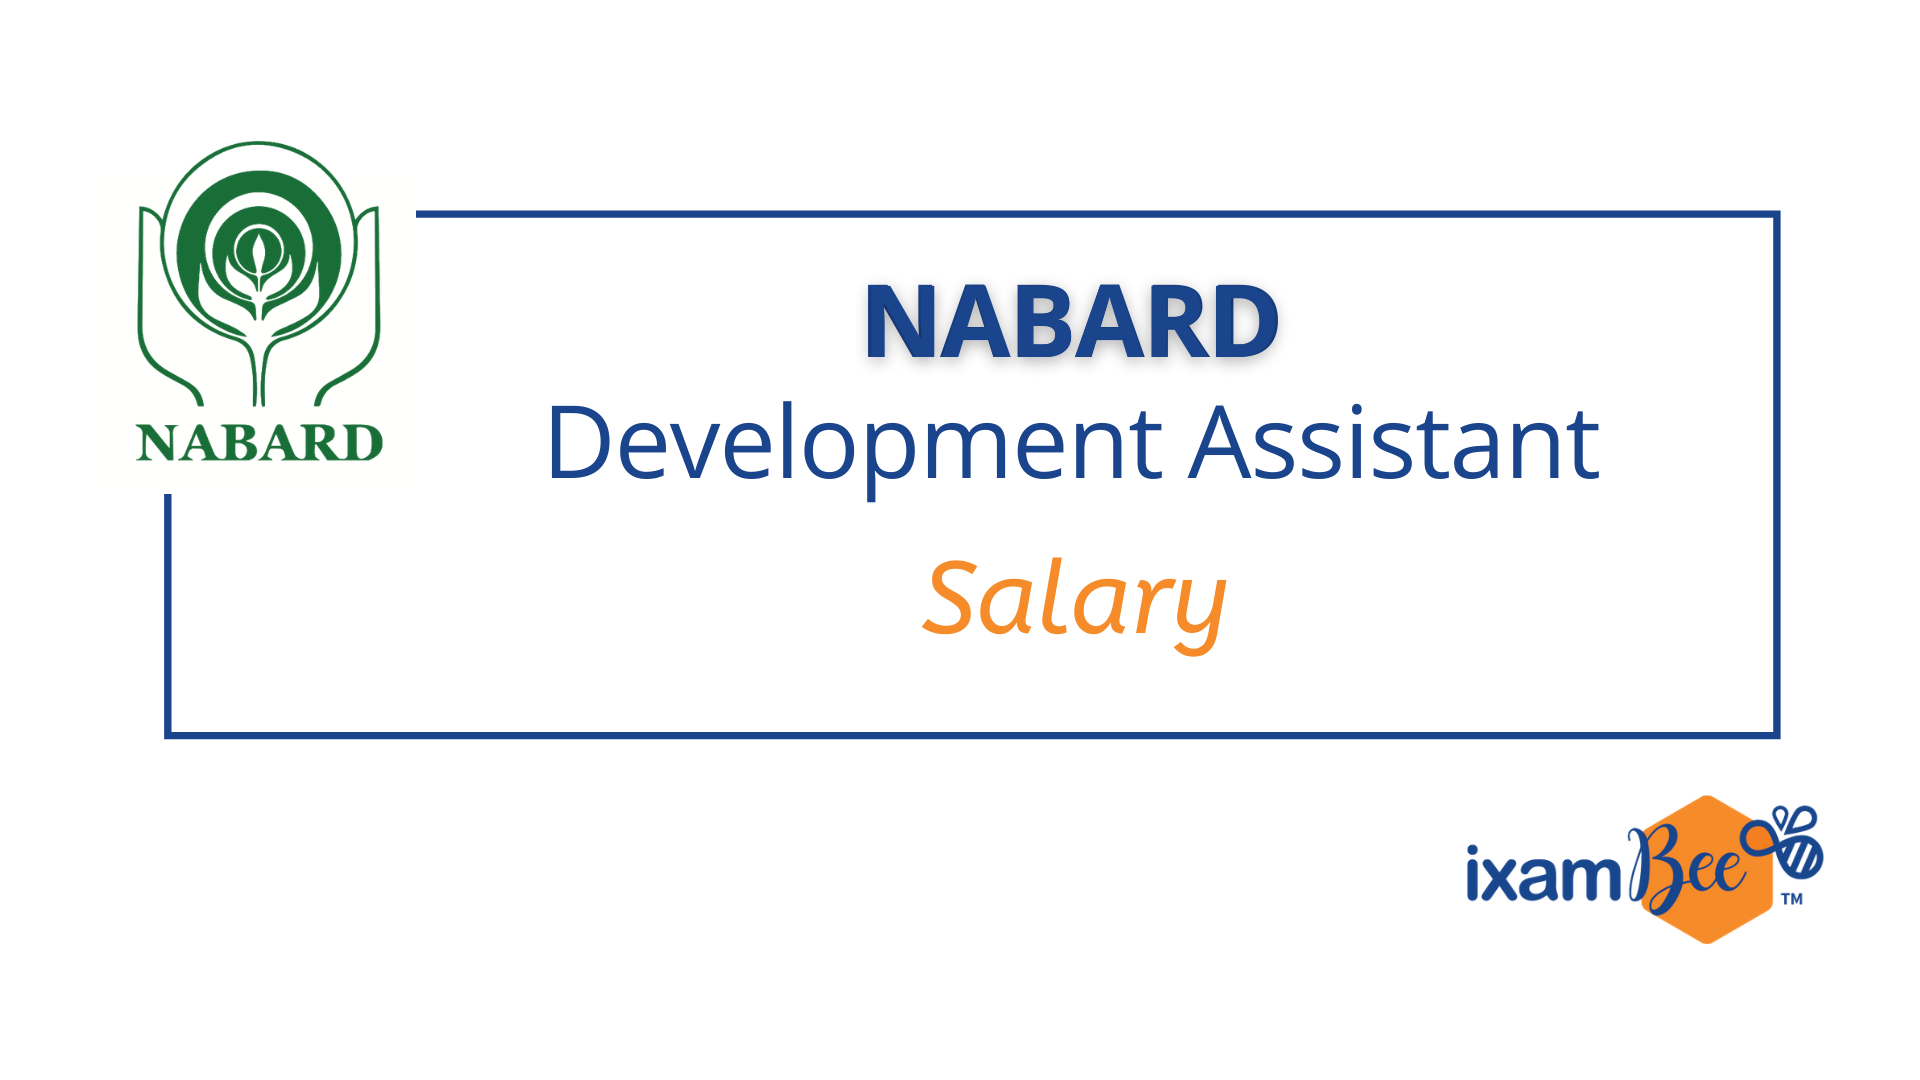 NABARD Development Assistant Salary